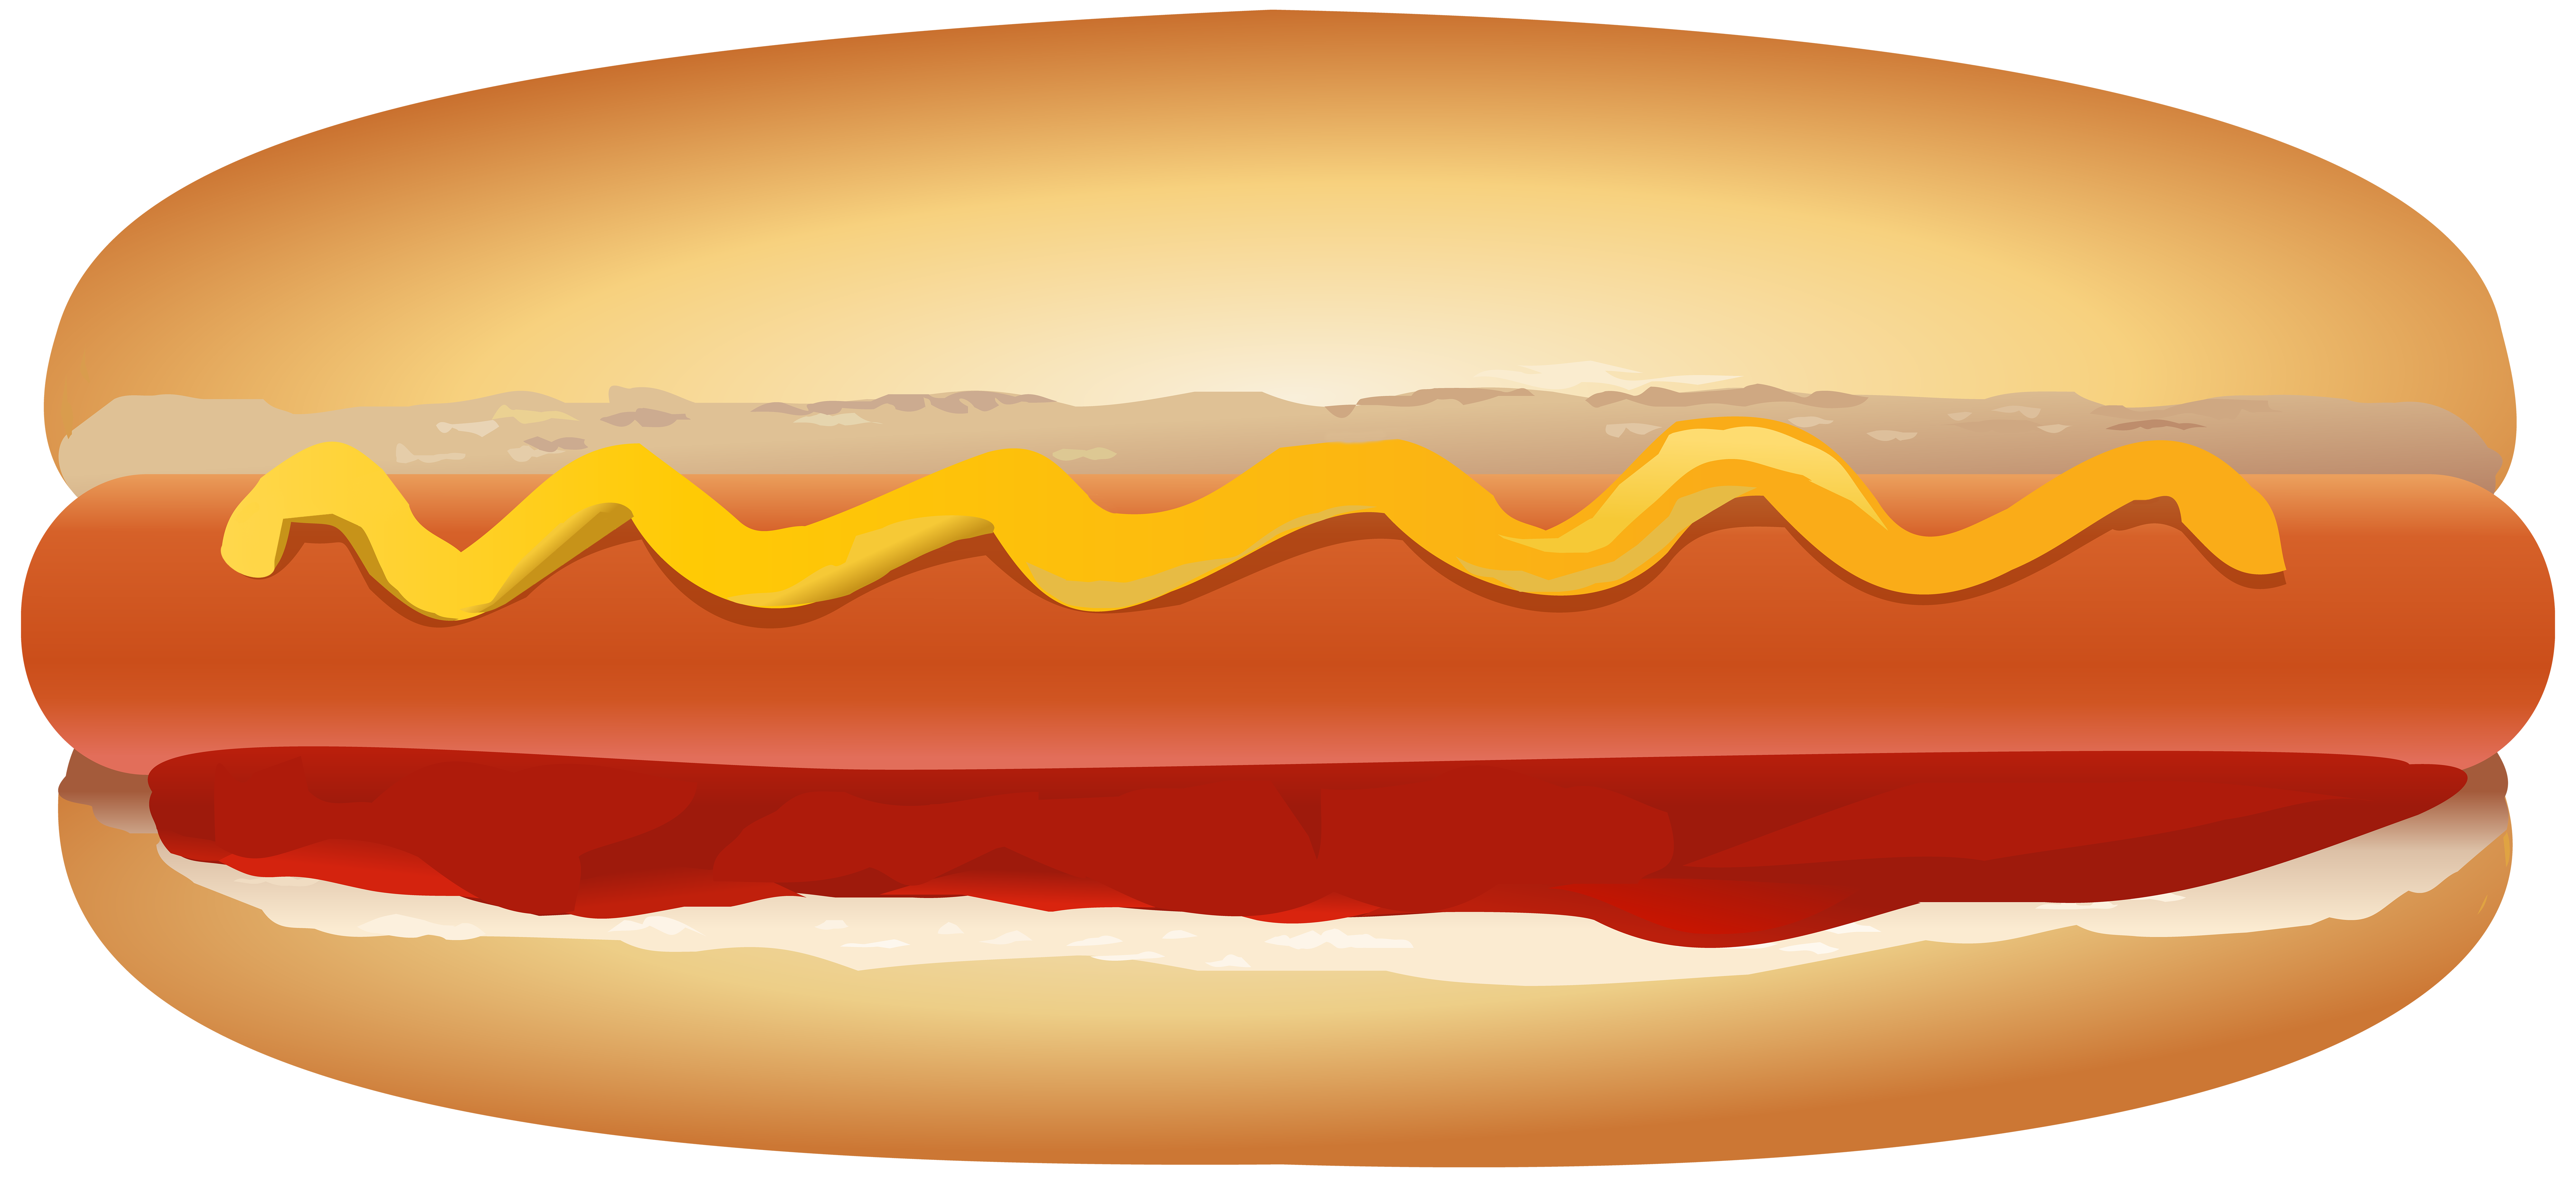 hotdog clipart happy